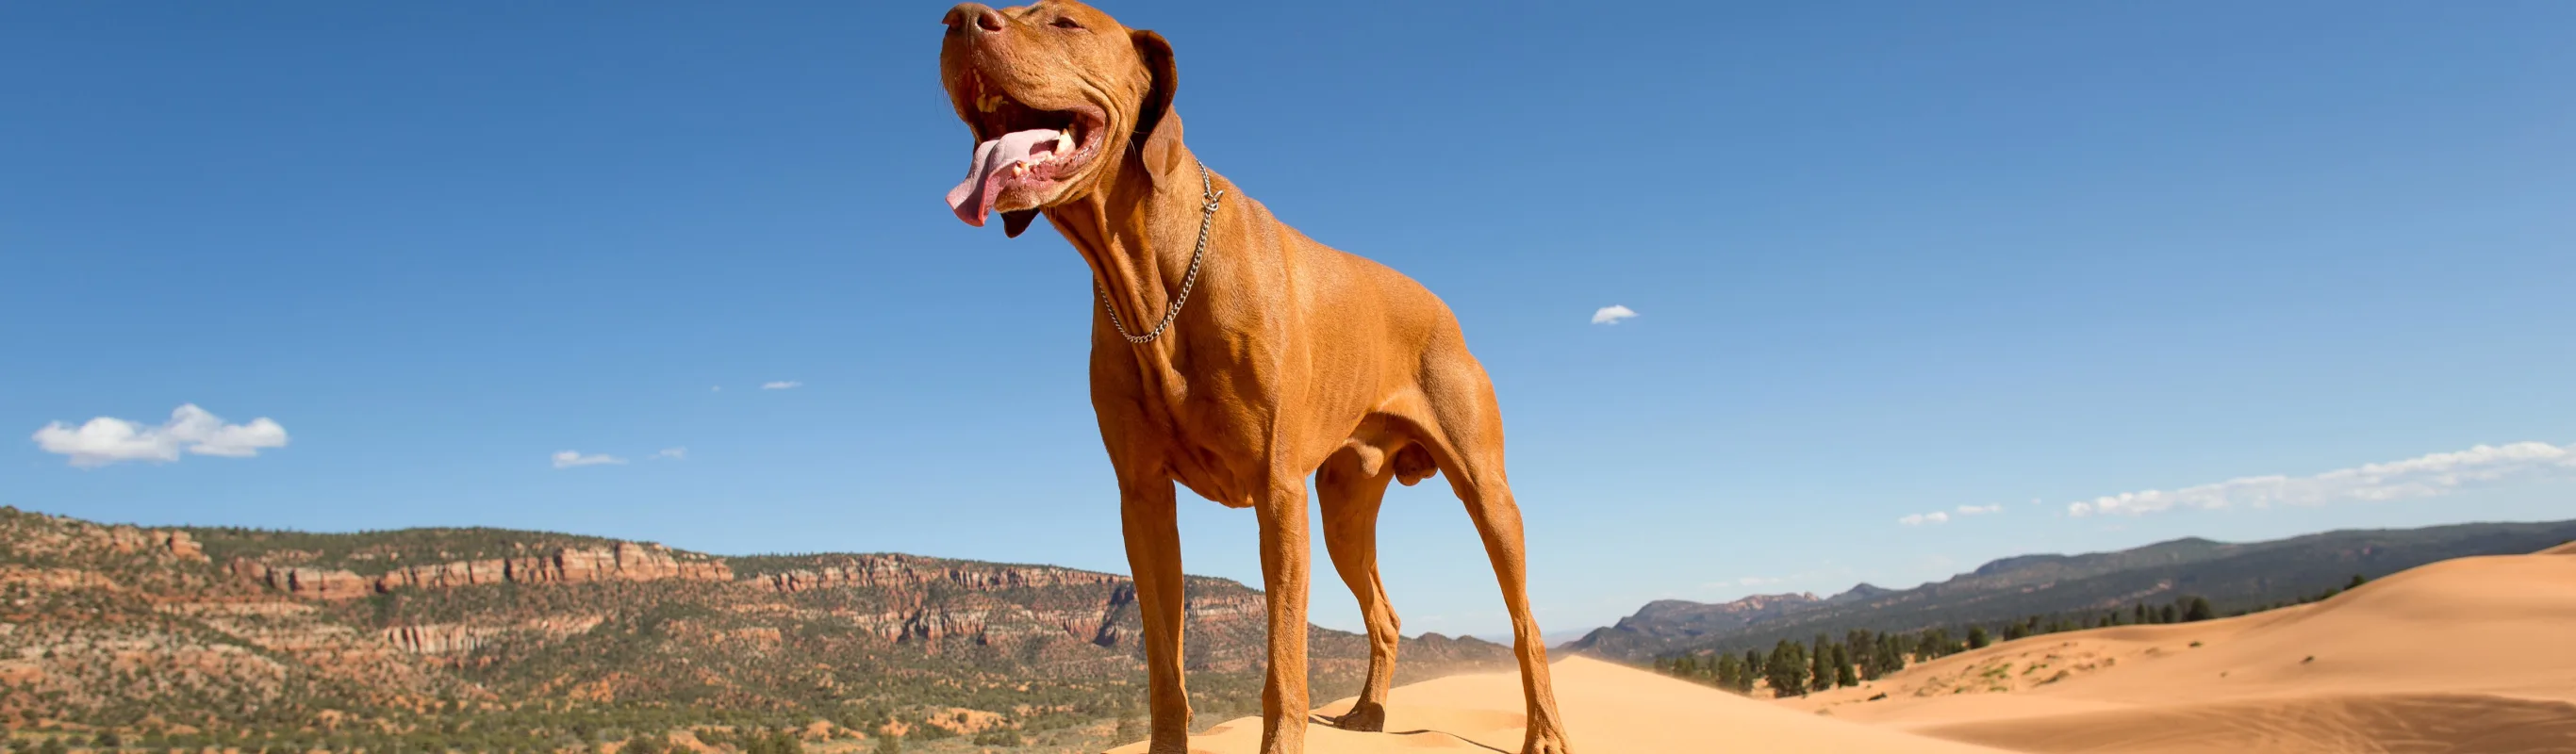 Dog standing over sand